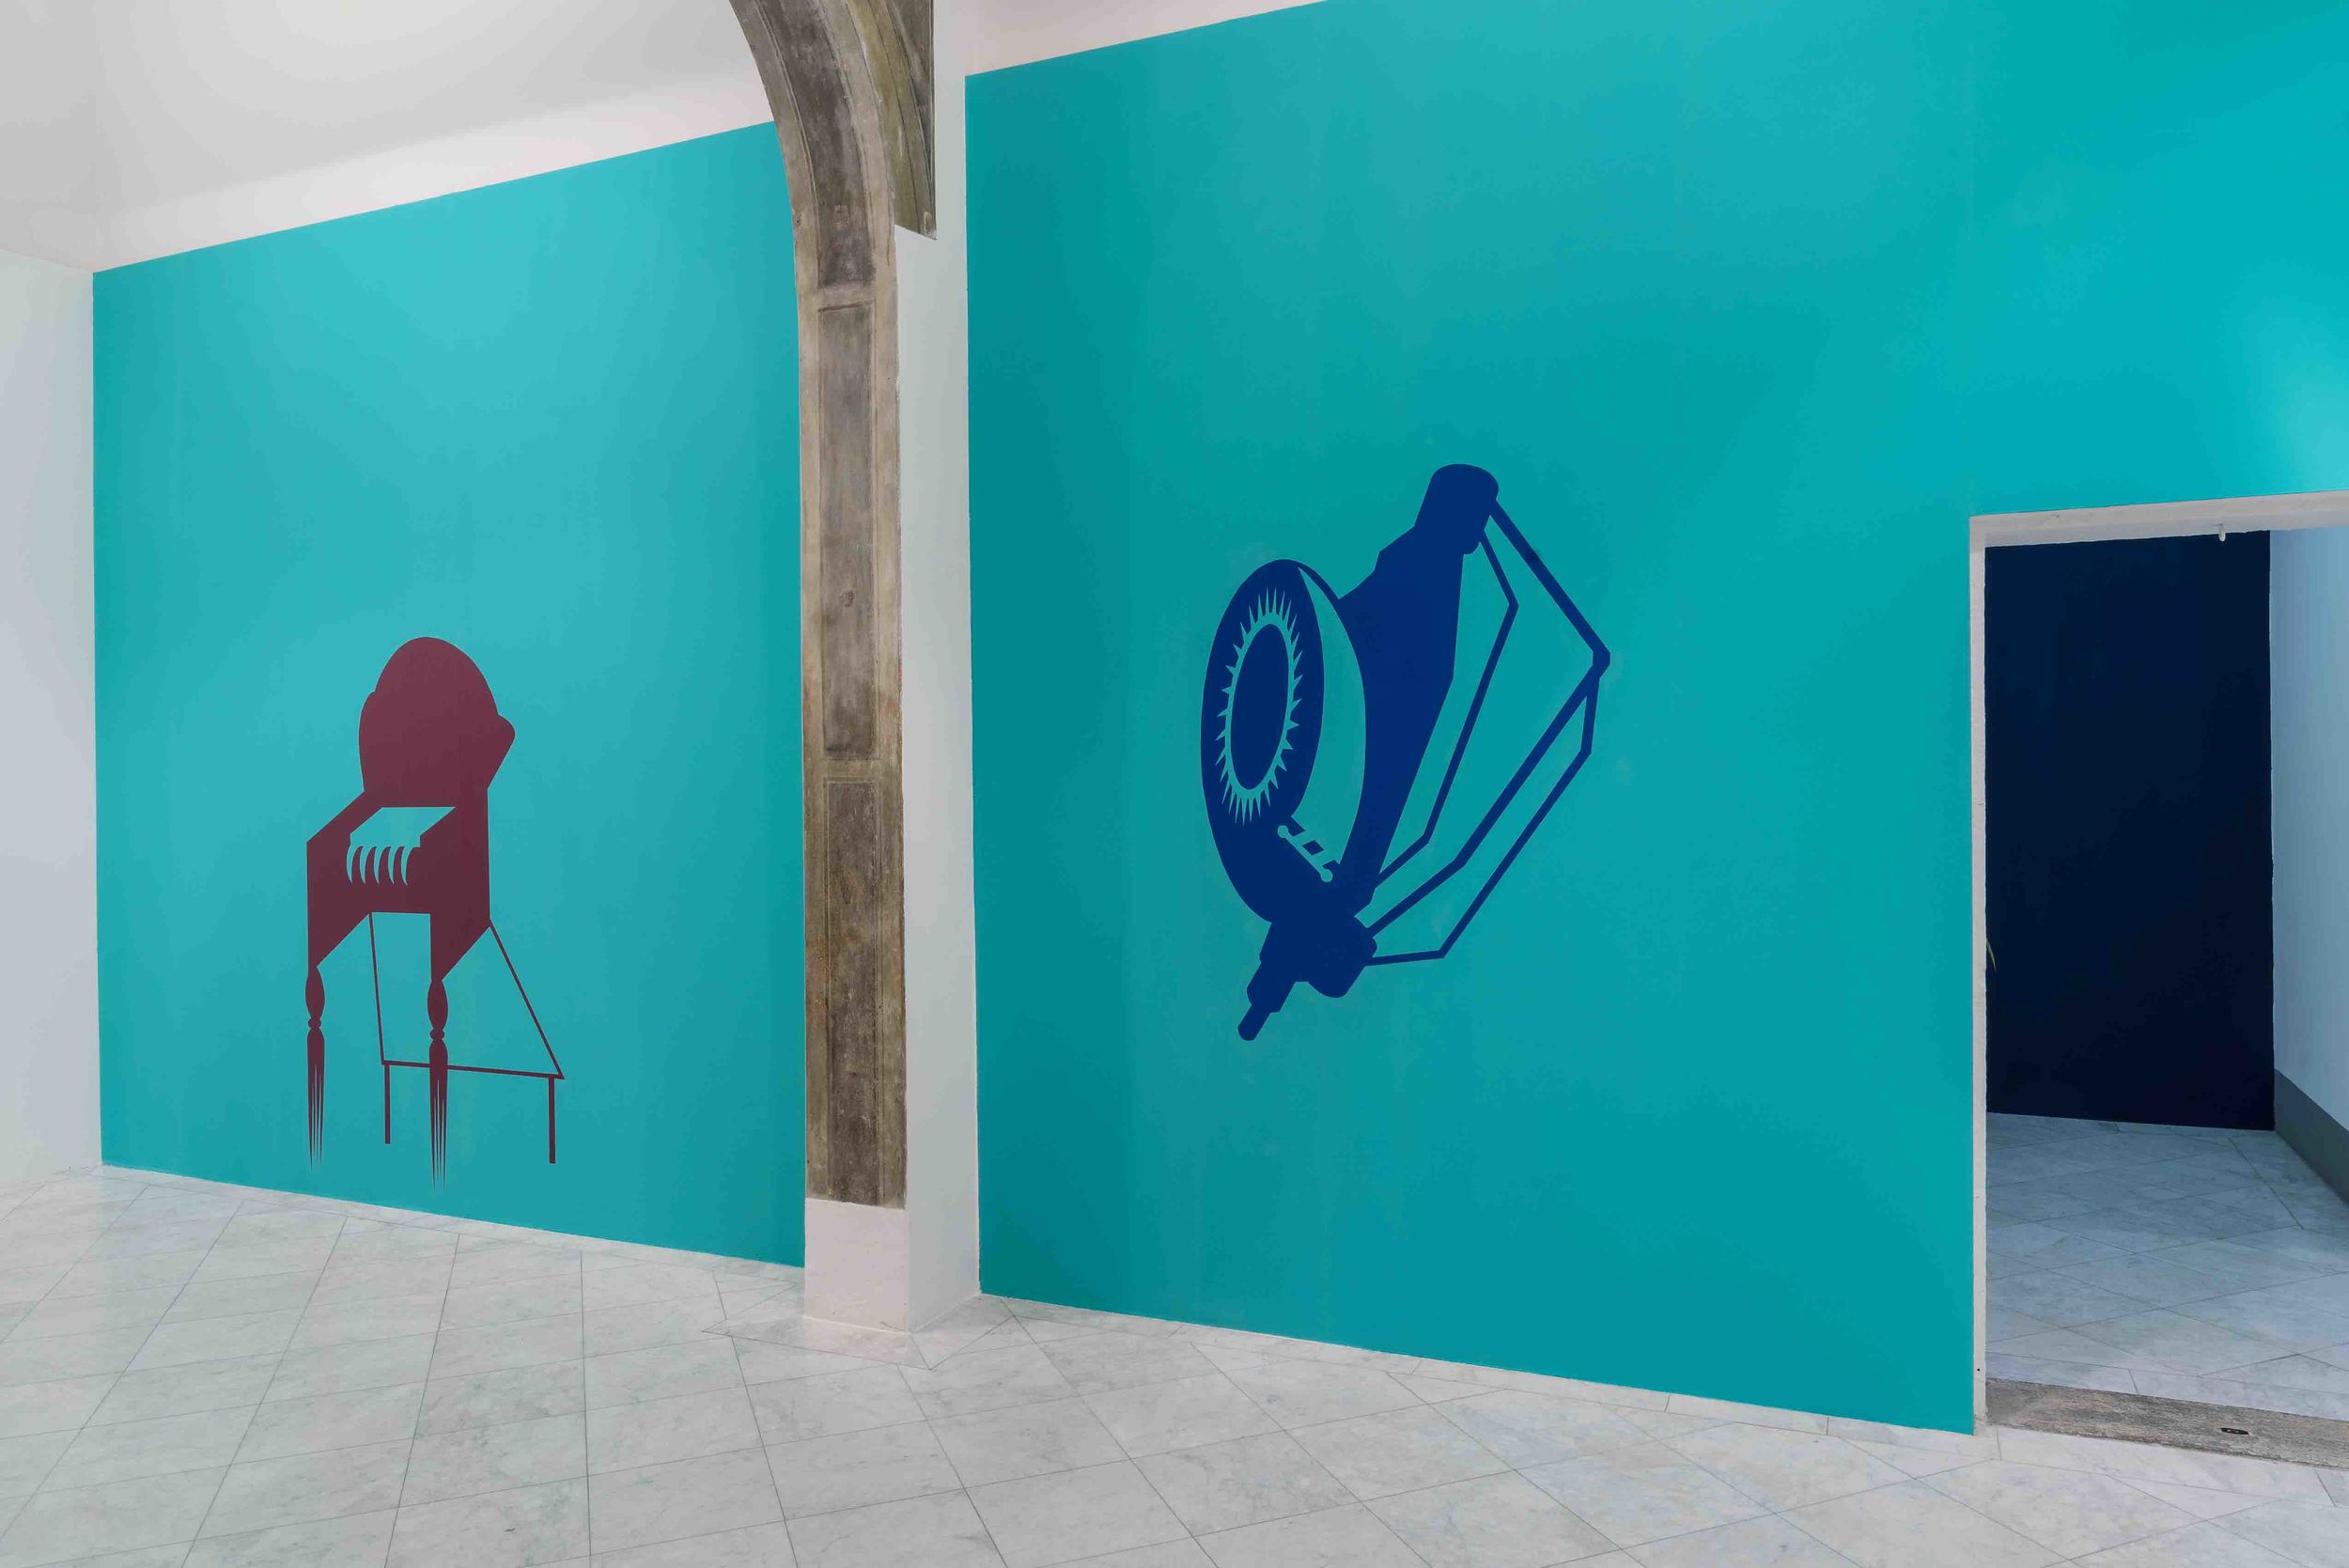   Mona Marzouk, Renovabitvr, acrylic colors, 2015. Installation view at Villa Romana. Photo credit:&nbsp;  Elzbieta Bialkowska.  